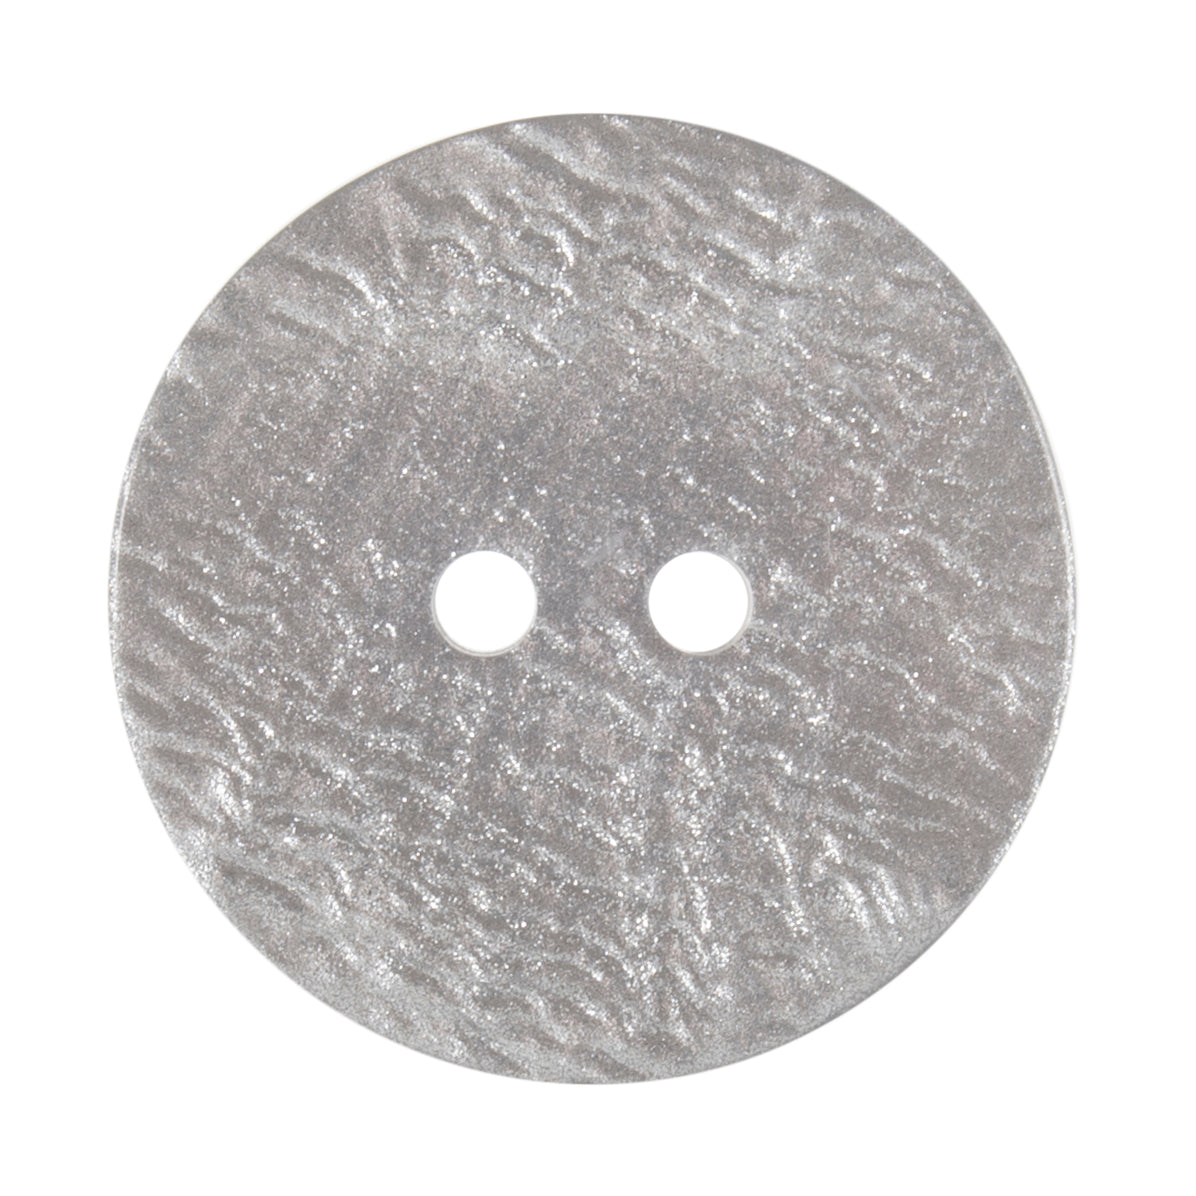 Metallic Shimmer Button: 2 Hole: 22mm